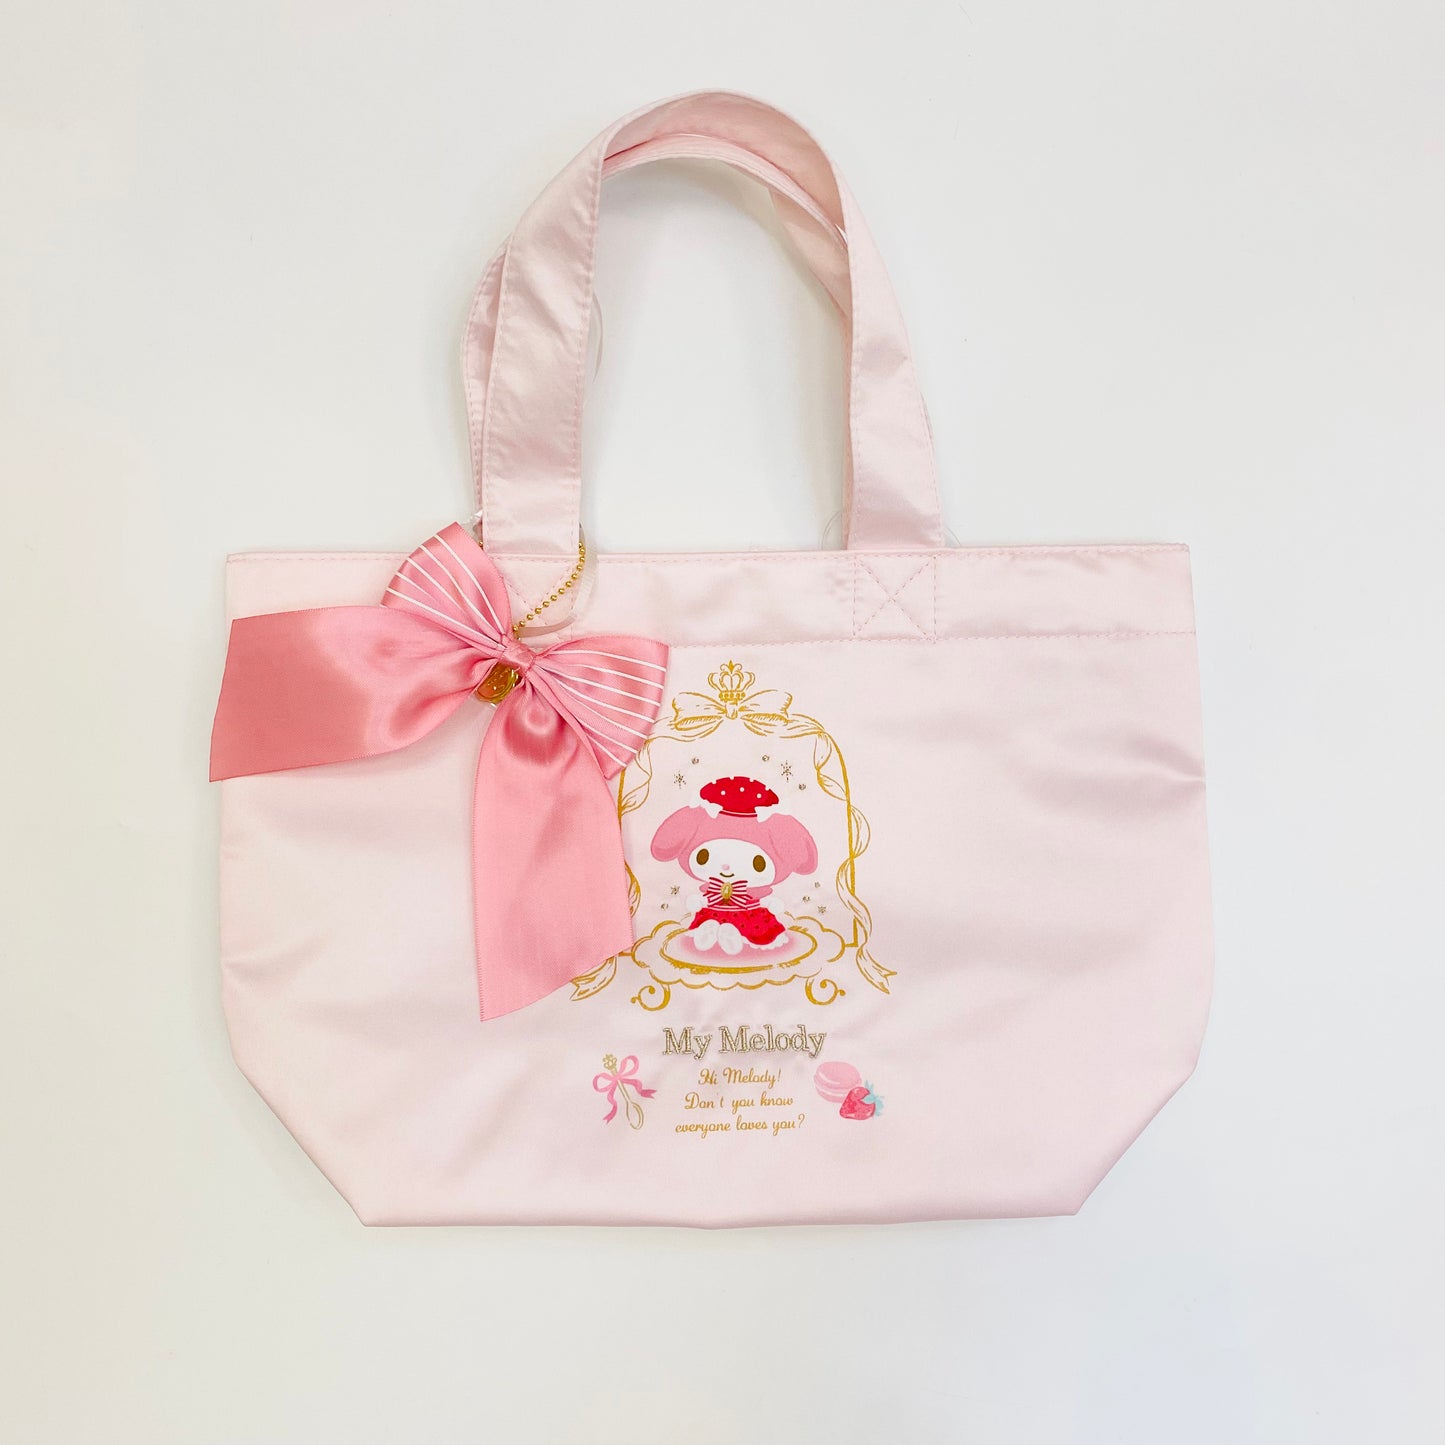 Sanrio TEA-ROOM Hand Bag